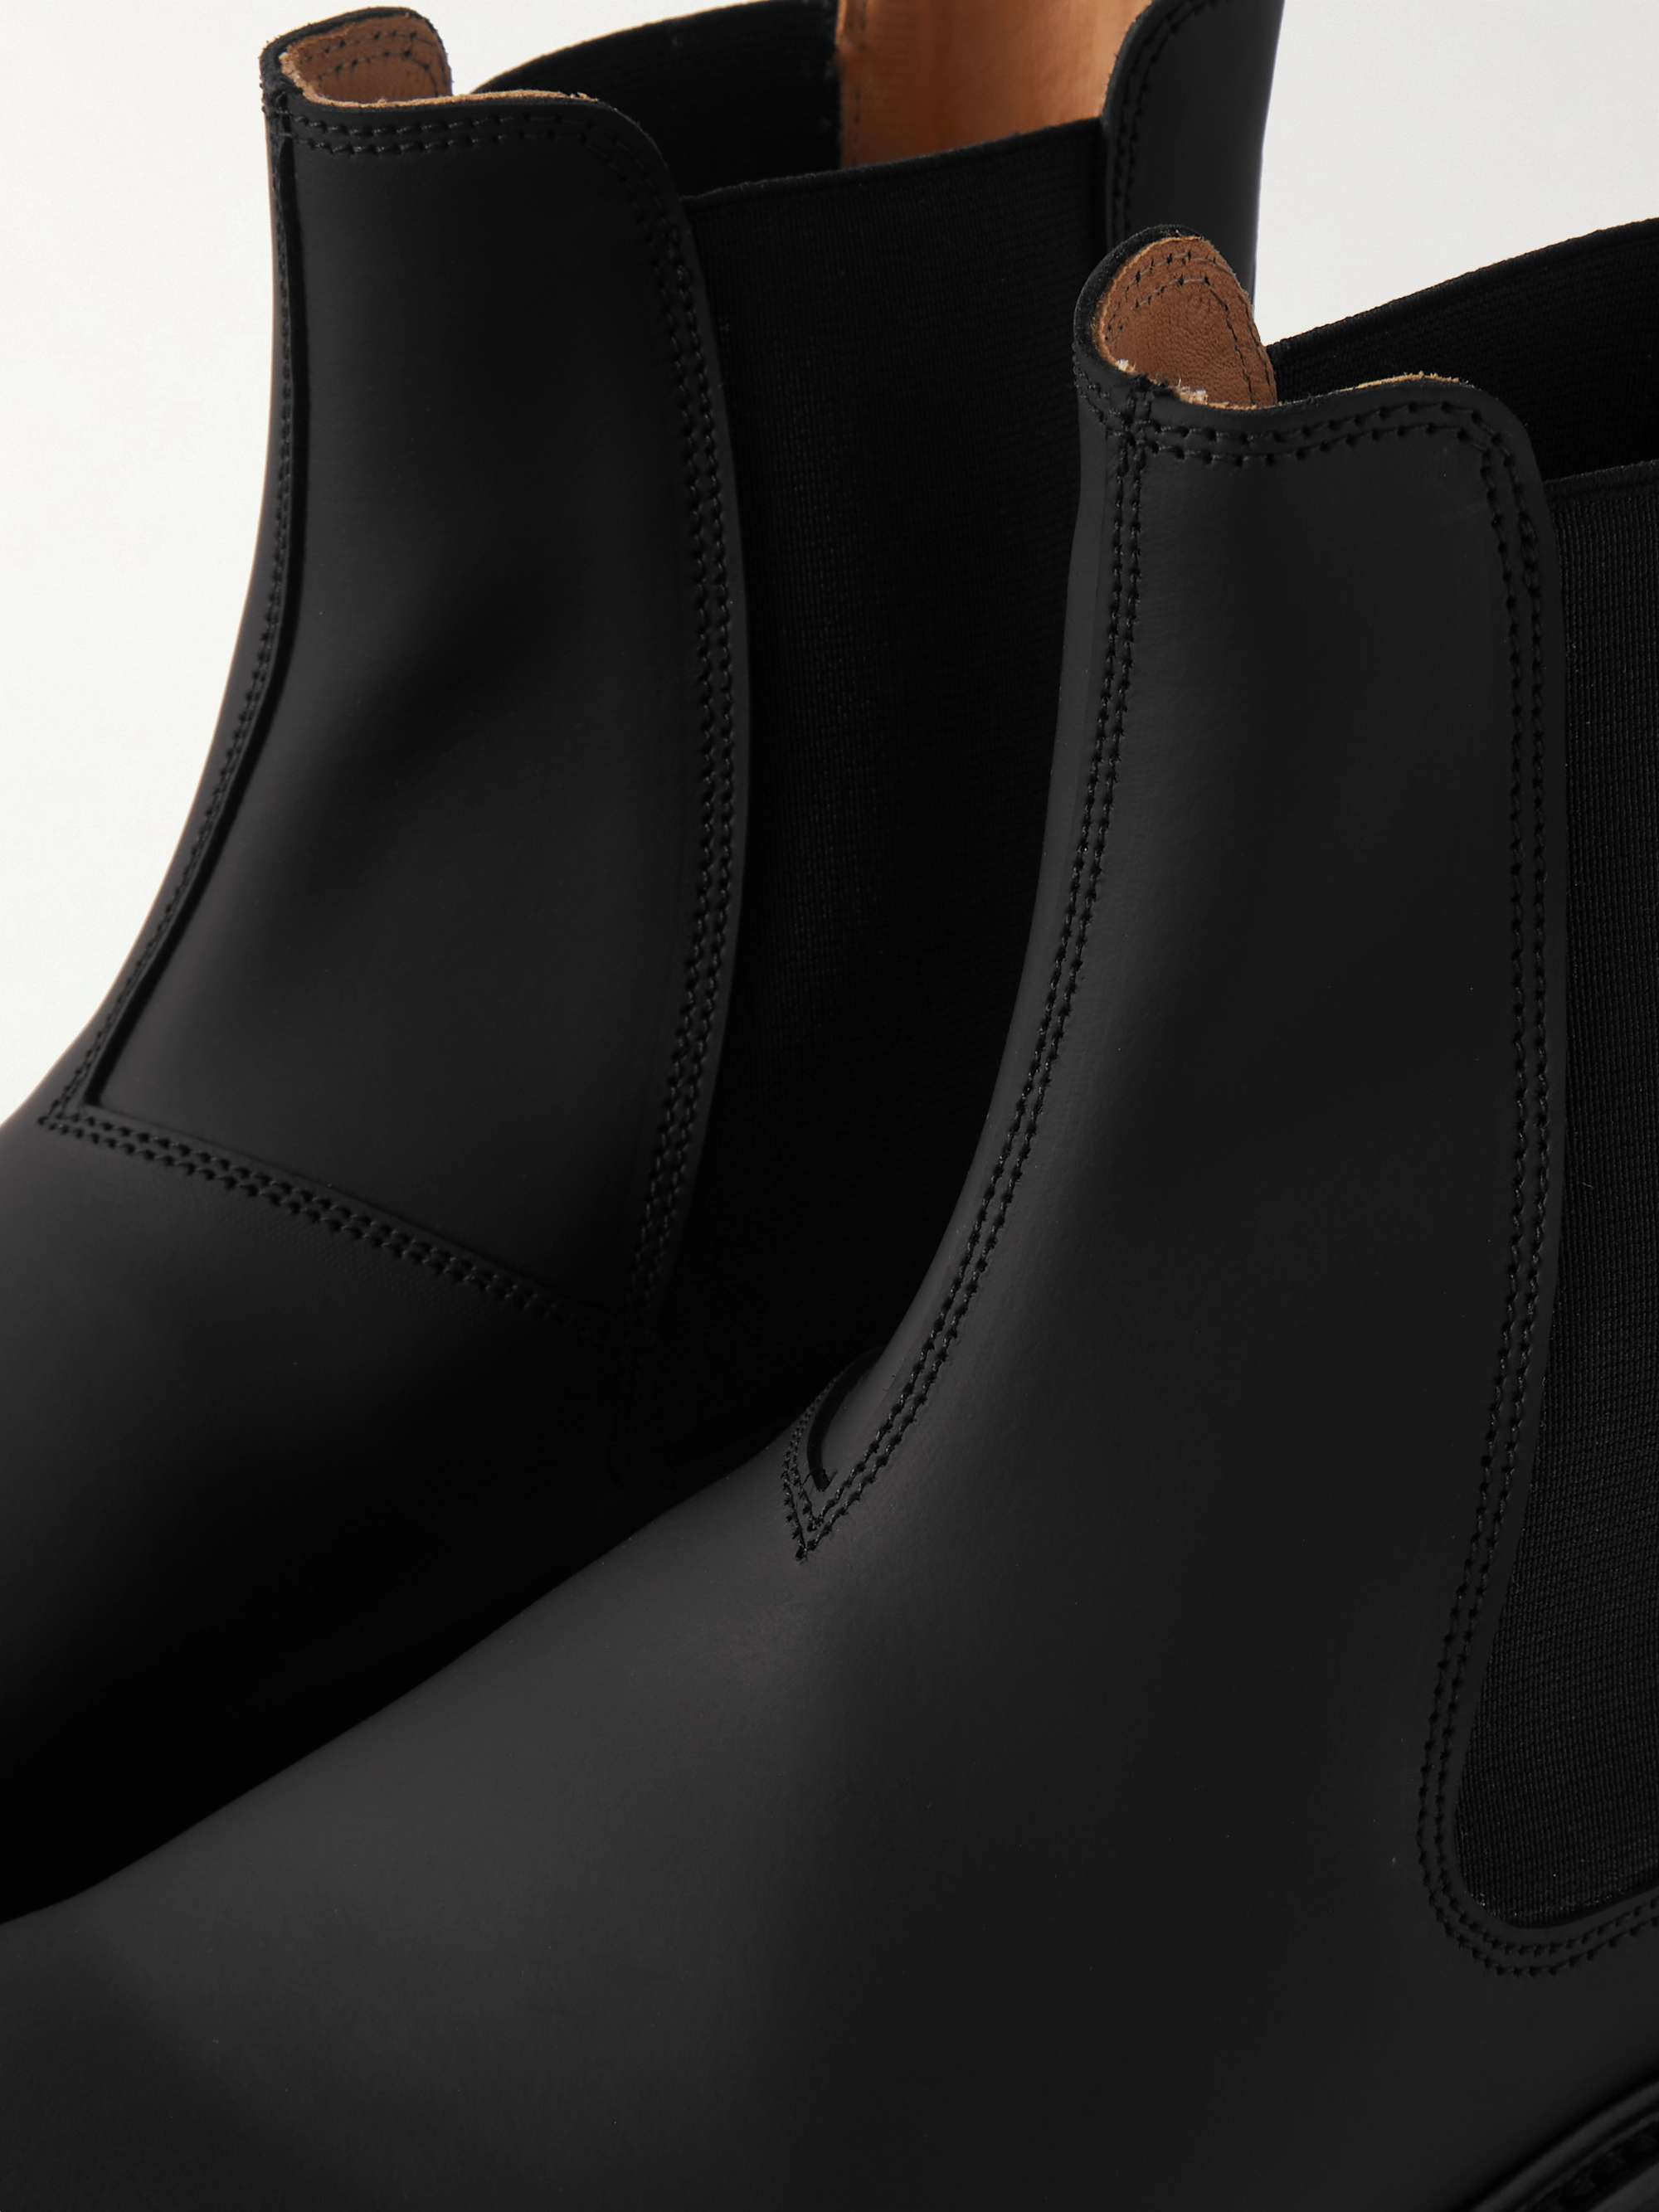 GRENSON Milo Rubberised Leather Chelsea Boots